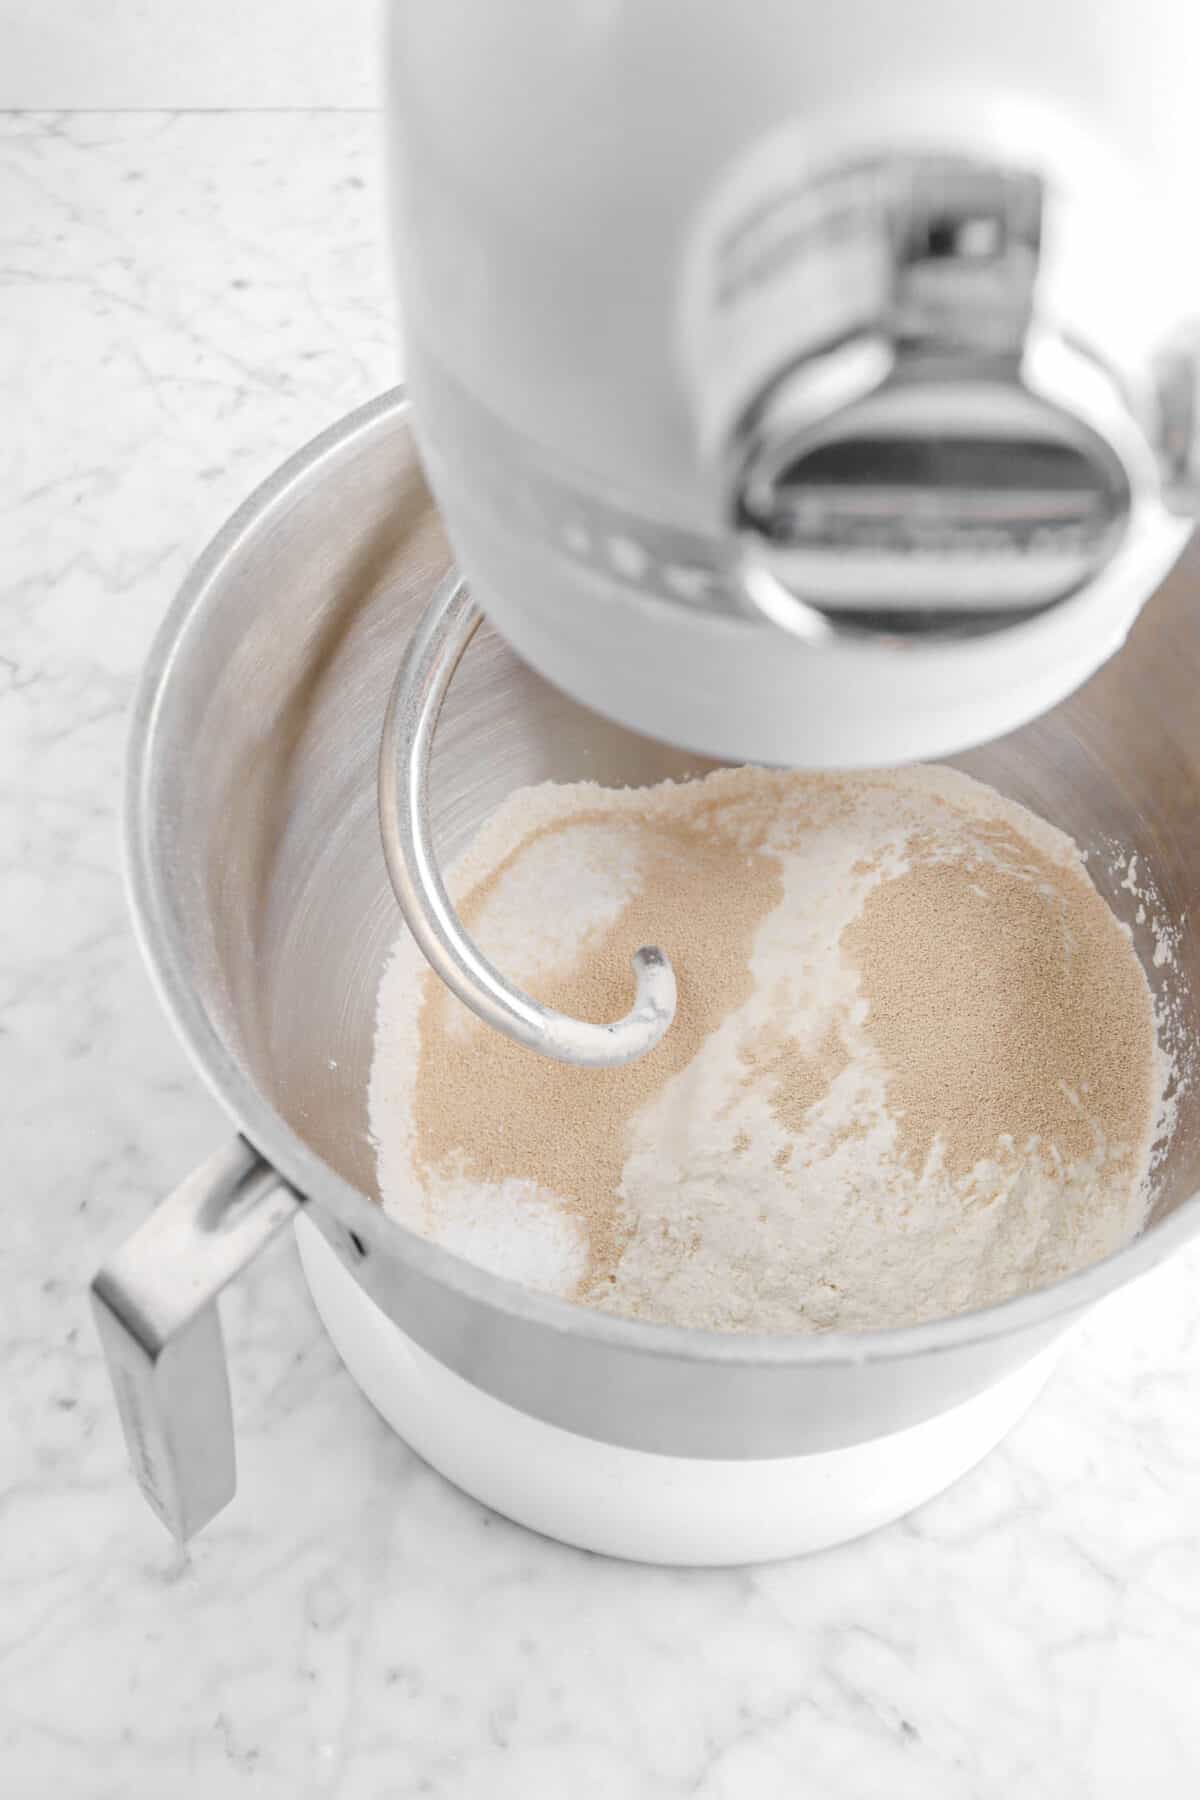 flour, salt, yeast, and sugar in mixer